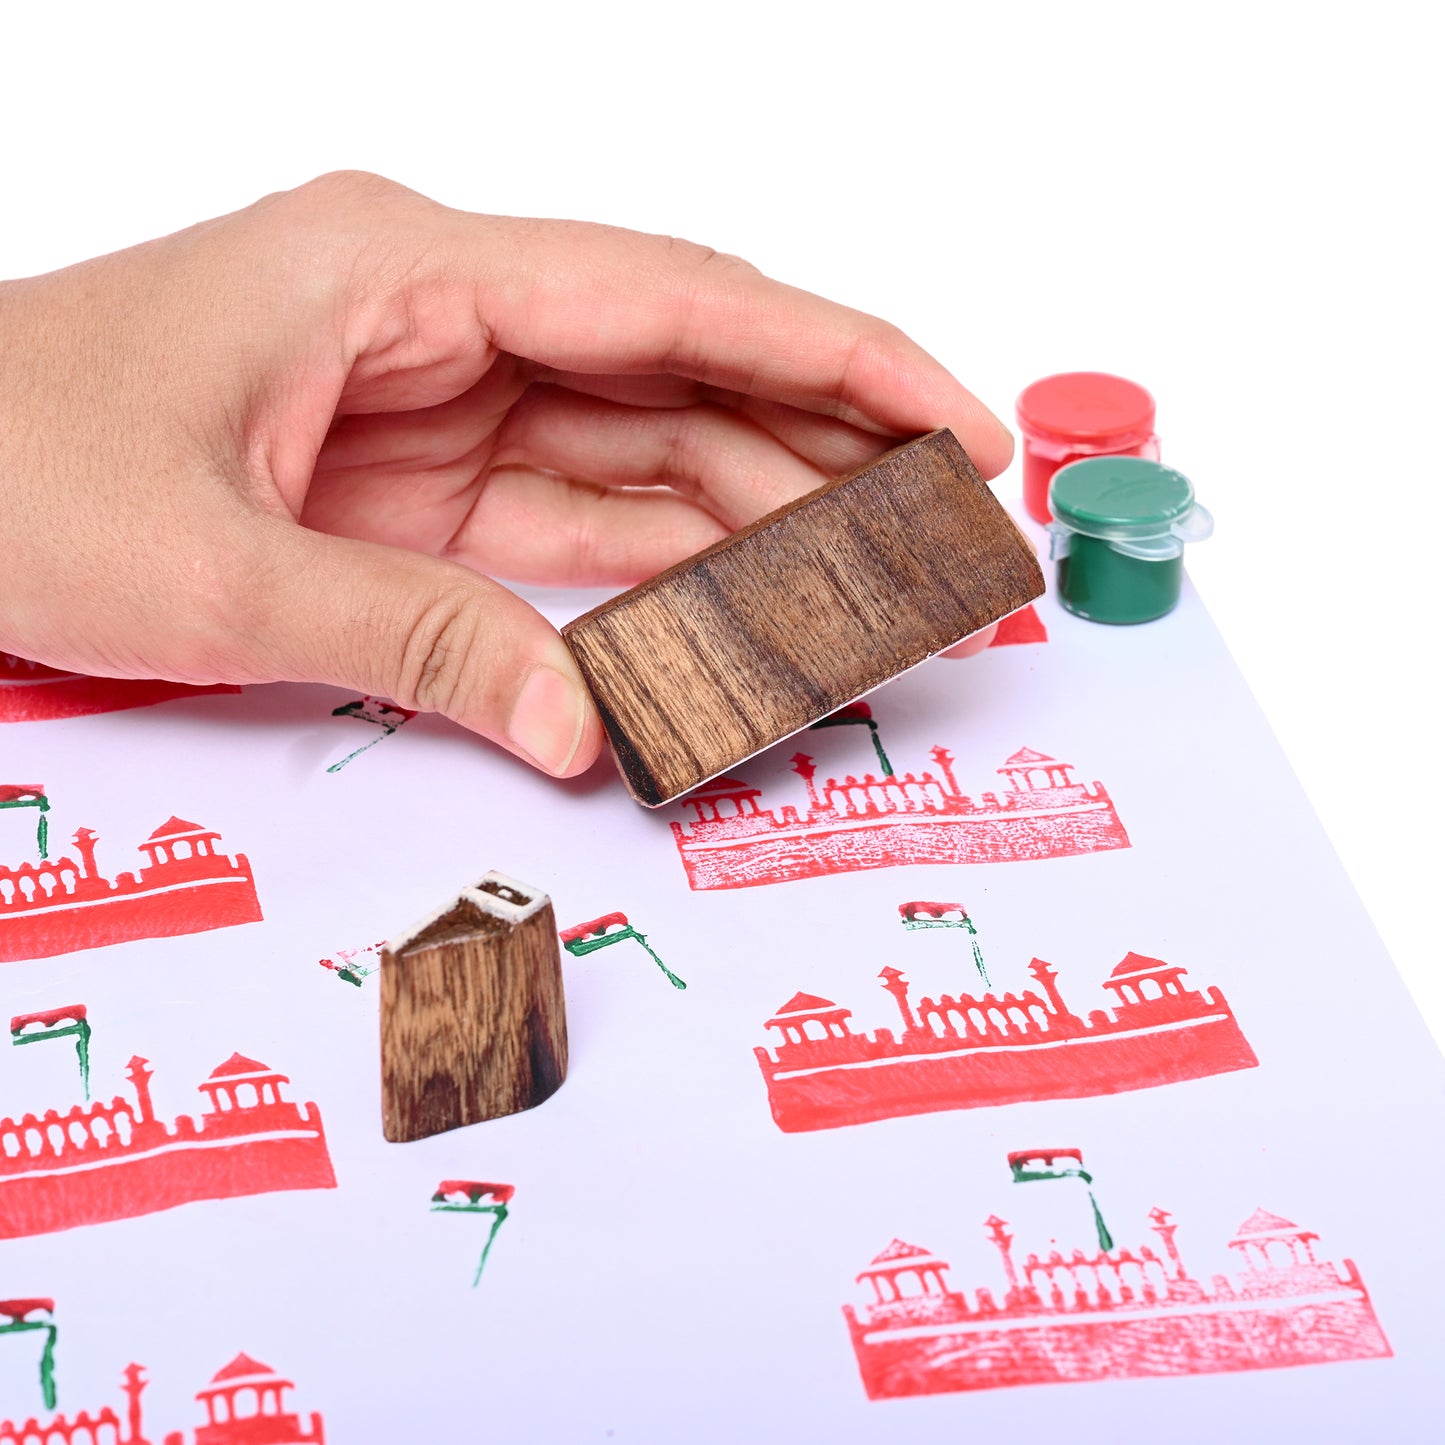 DIY Wooden Block Printing Set Red Fort